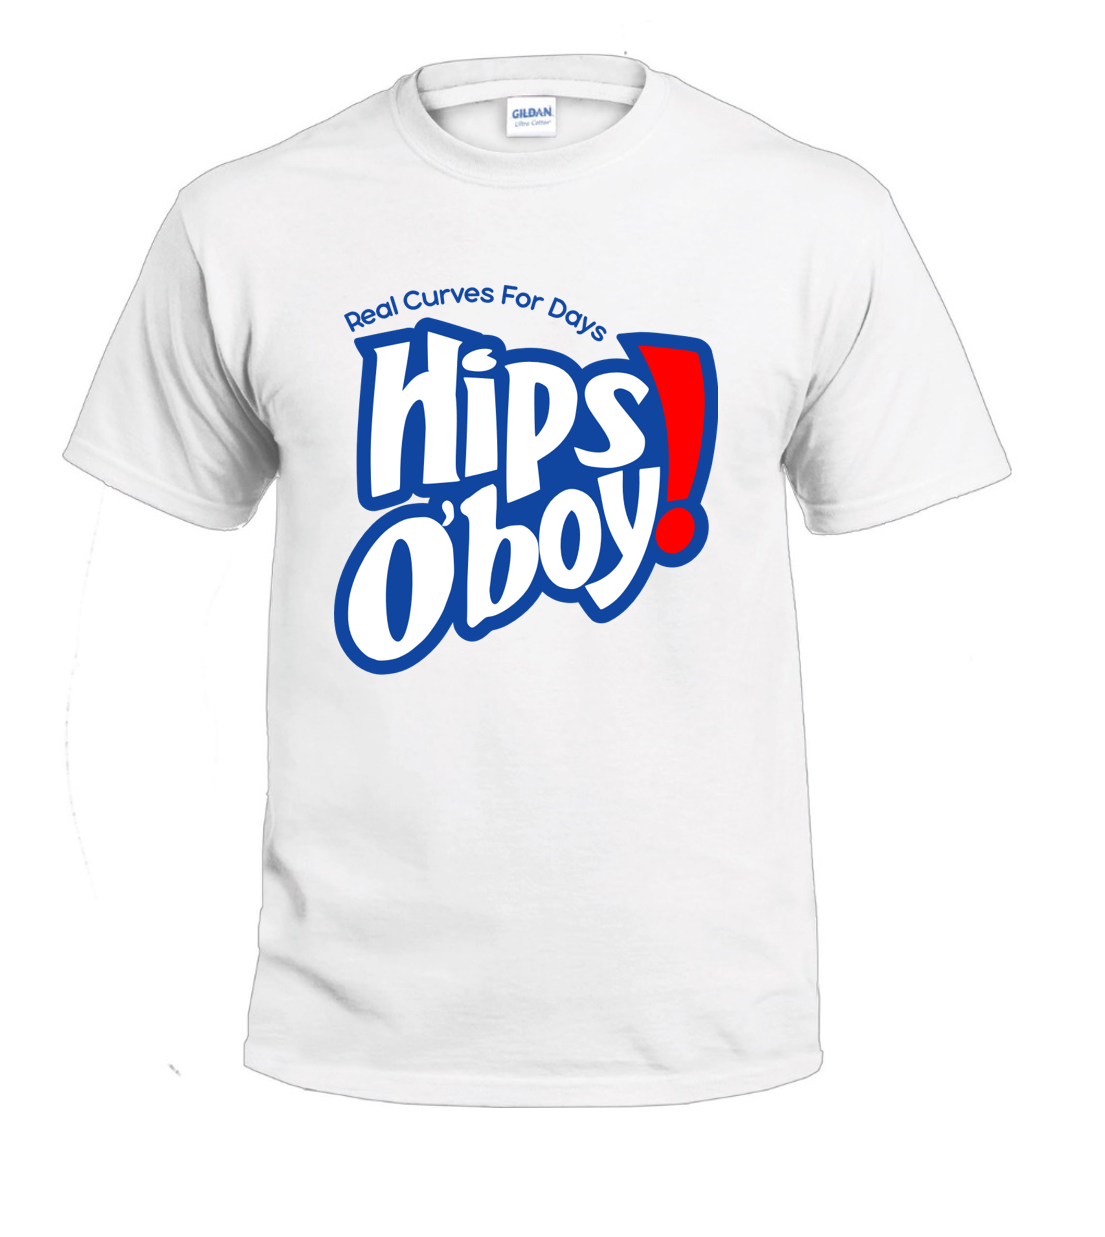 Hips Oboy t-shirt